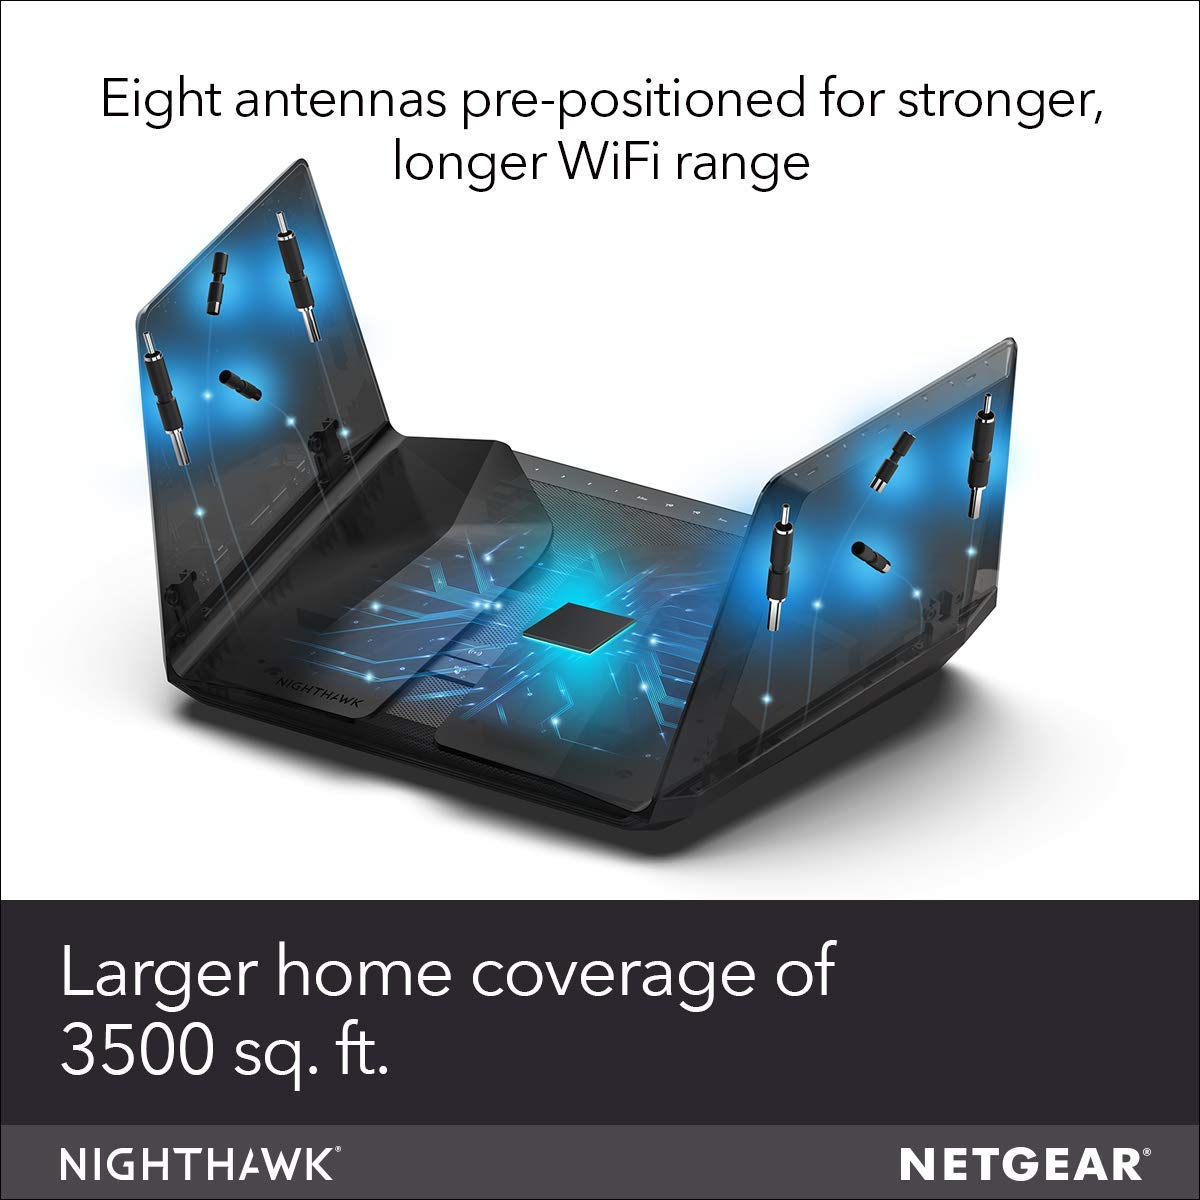 NETGEAR RAX120-100NAS Nighthawk AX12 12-Stream WiFi 6 Router – Certified Refurbished